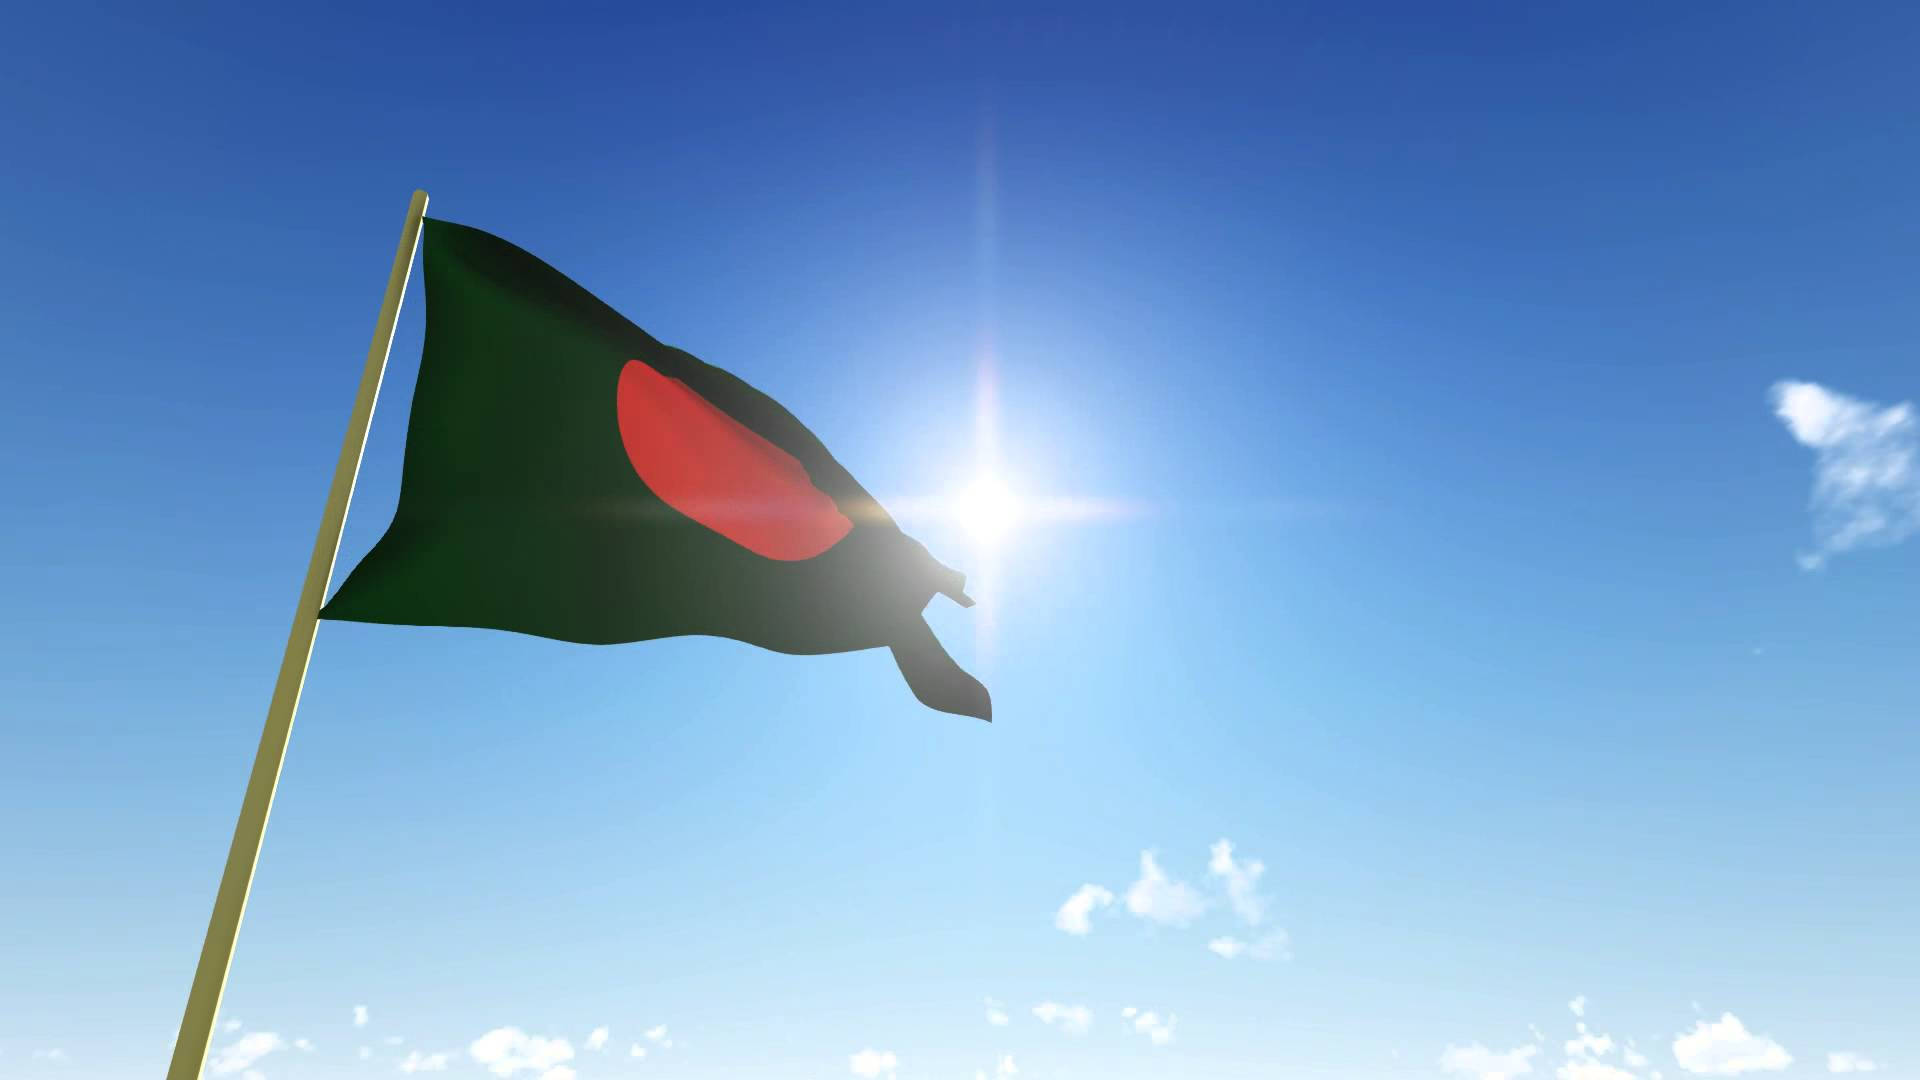 Bangladesh Flag In Flag Pole